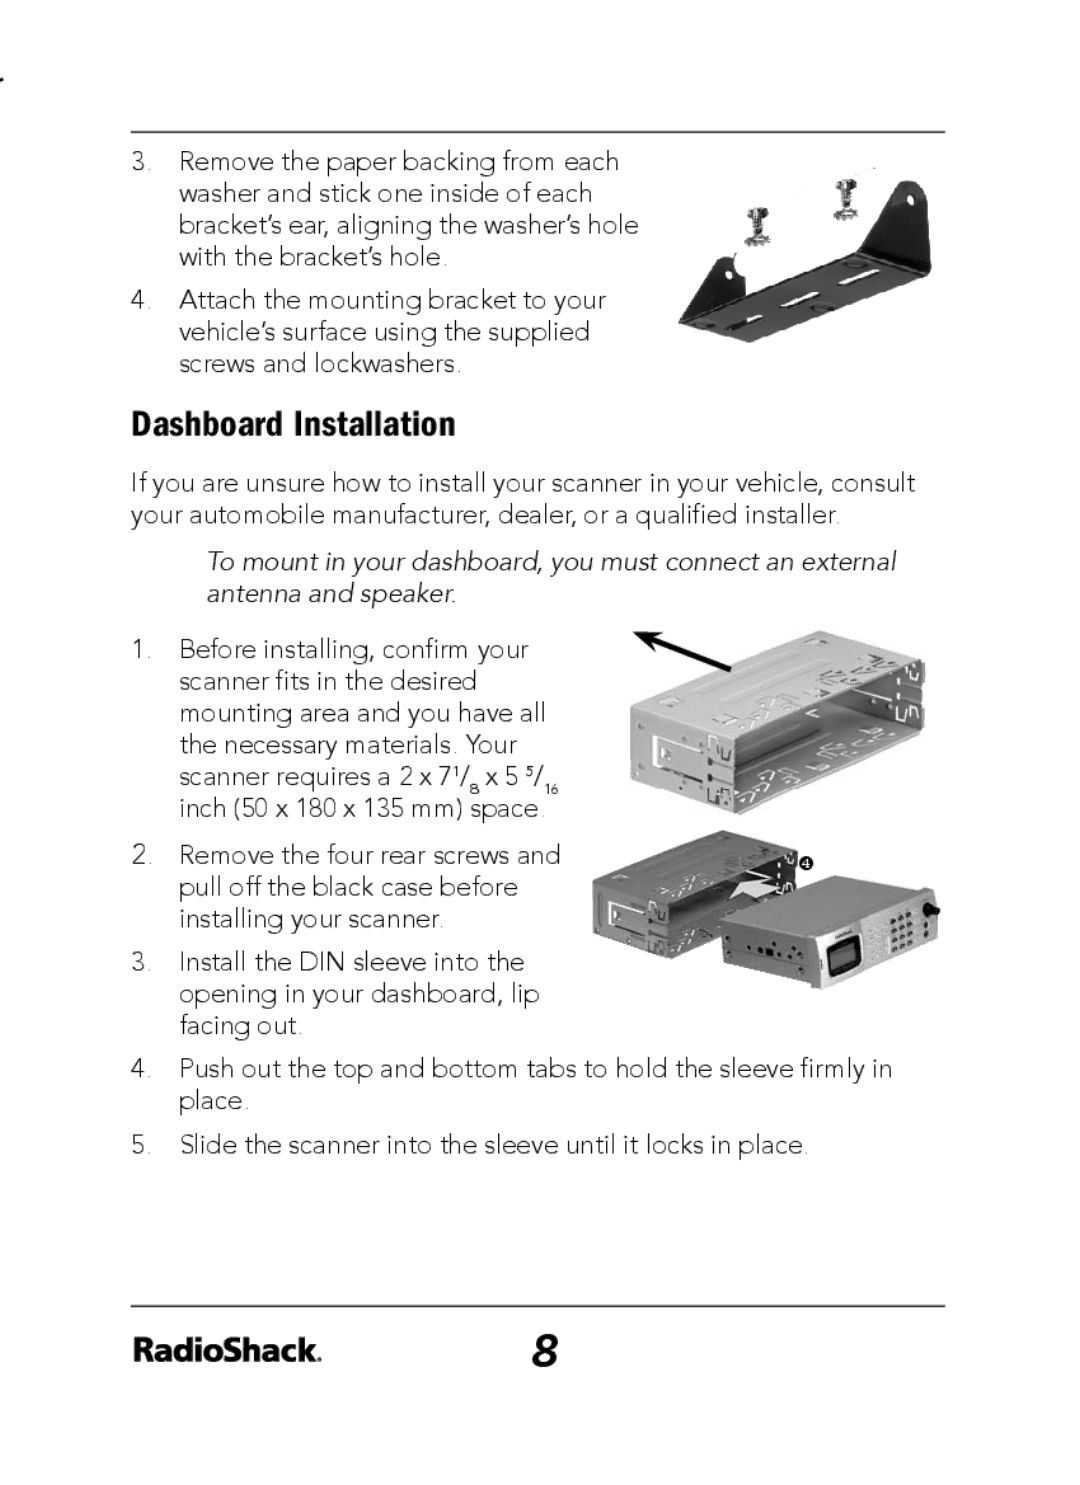 Radio Shack 20-163 manual Dashboard Installation 